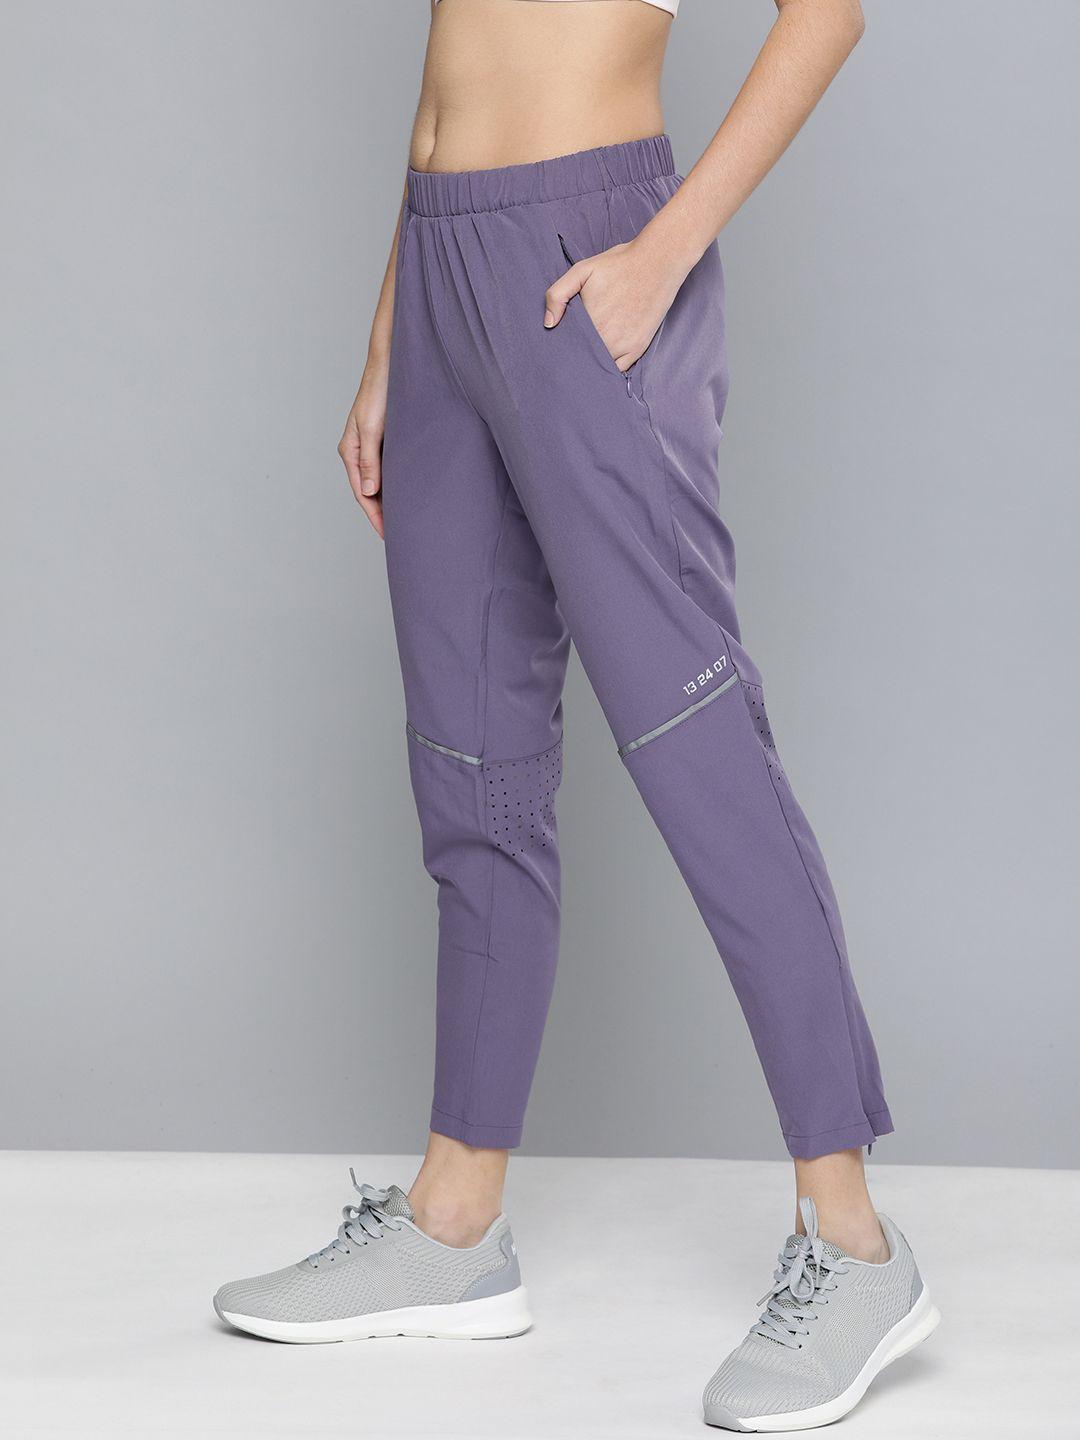 hrx-by-hrithik-roshan-women-purple-solid-slim-rapid-dry-antimicrobial-training-track-pants